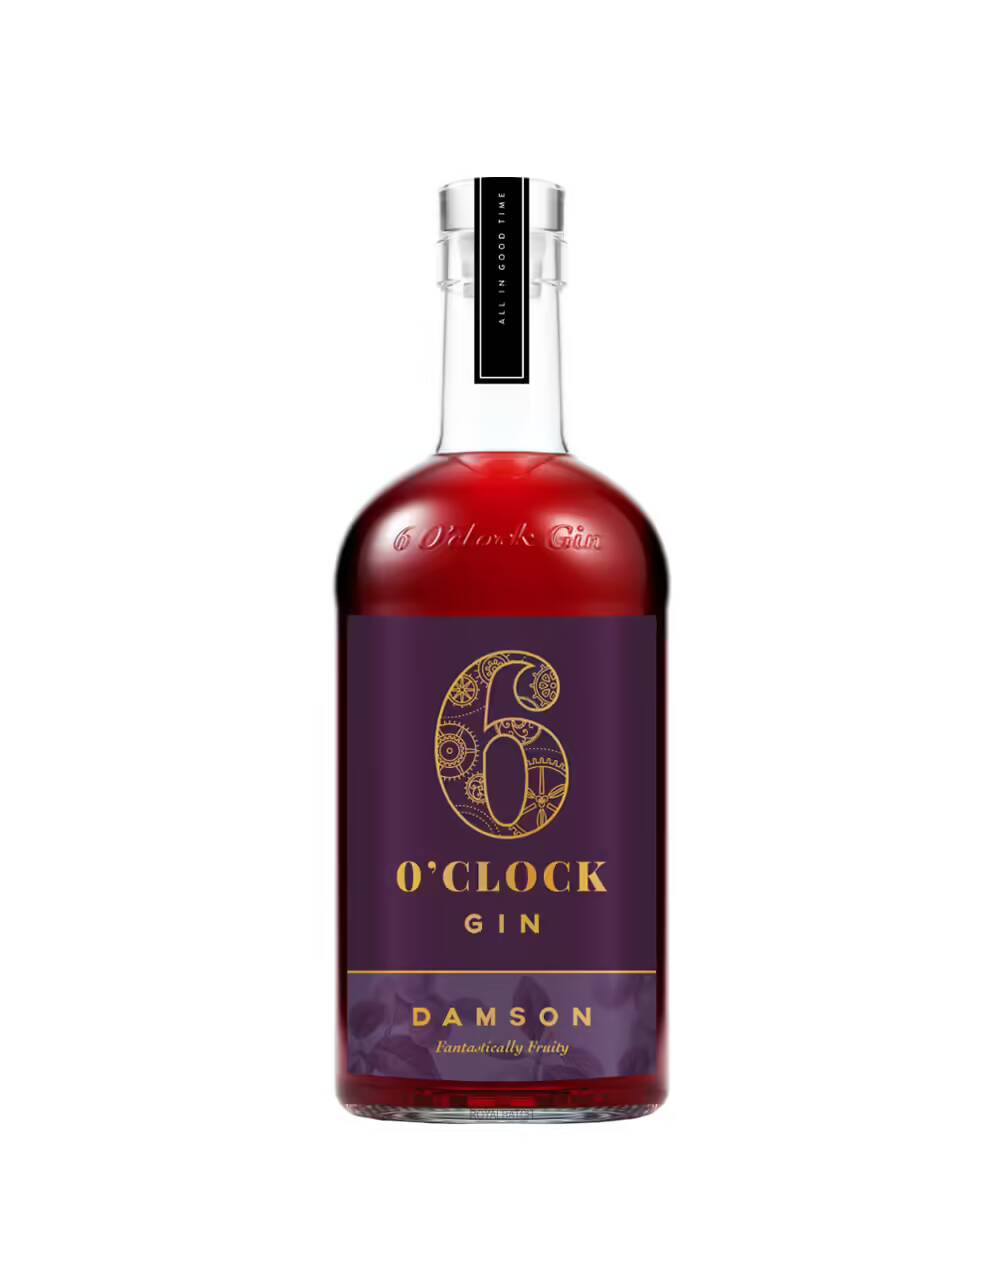 6 OClock Damson Gin